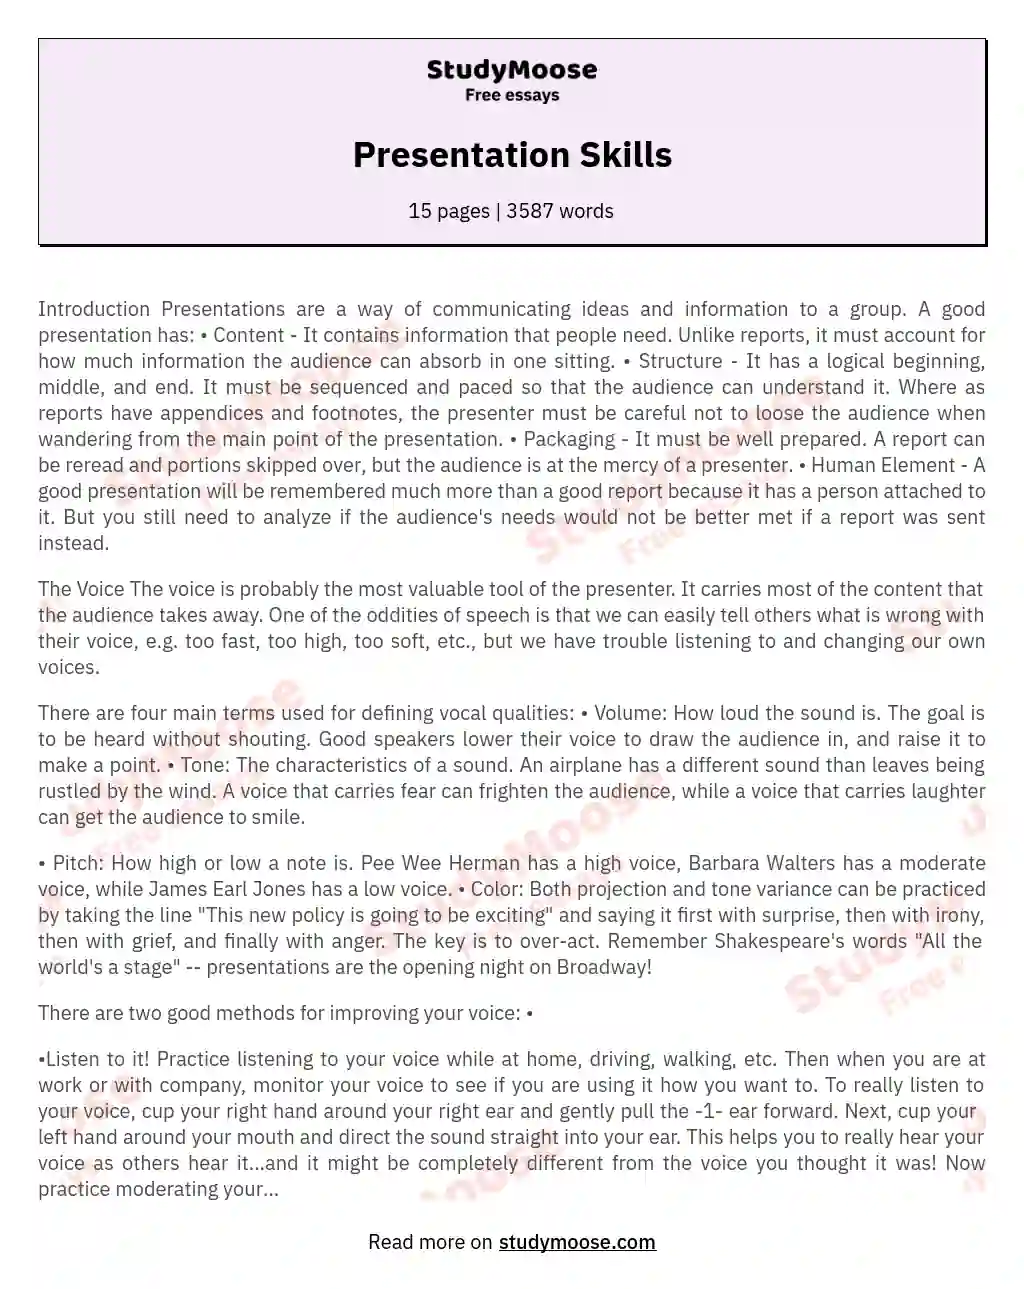 Presentation Skills essay